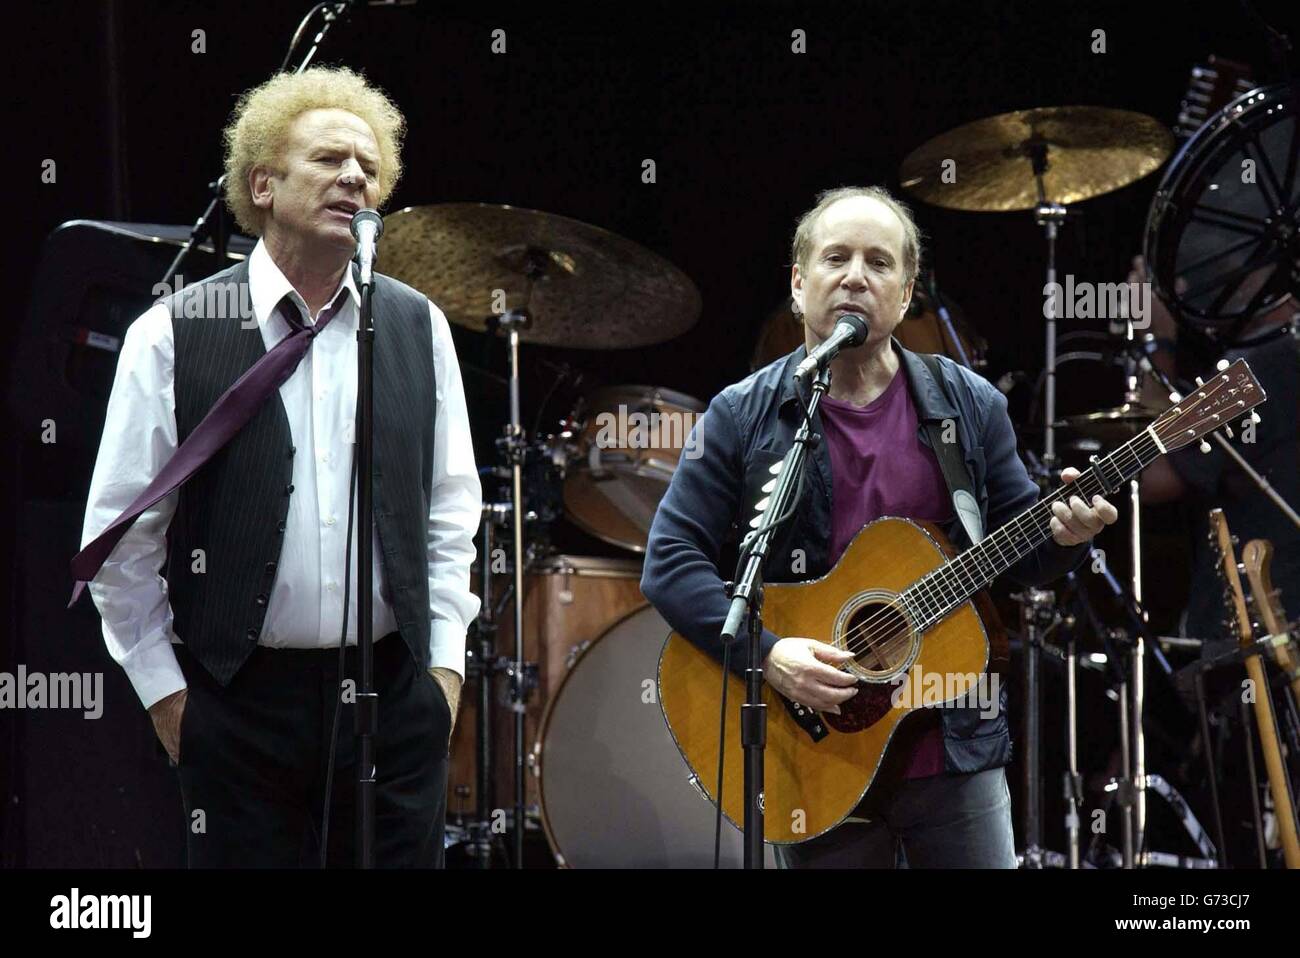 Simon and Garfunkel concert Stock Photo Alamy